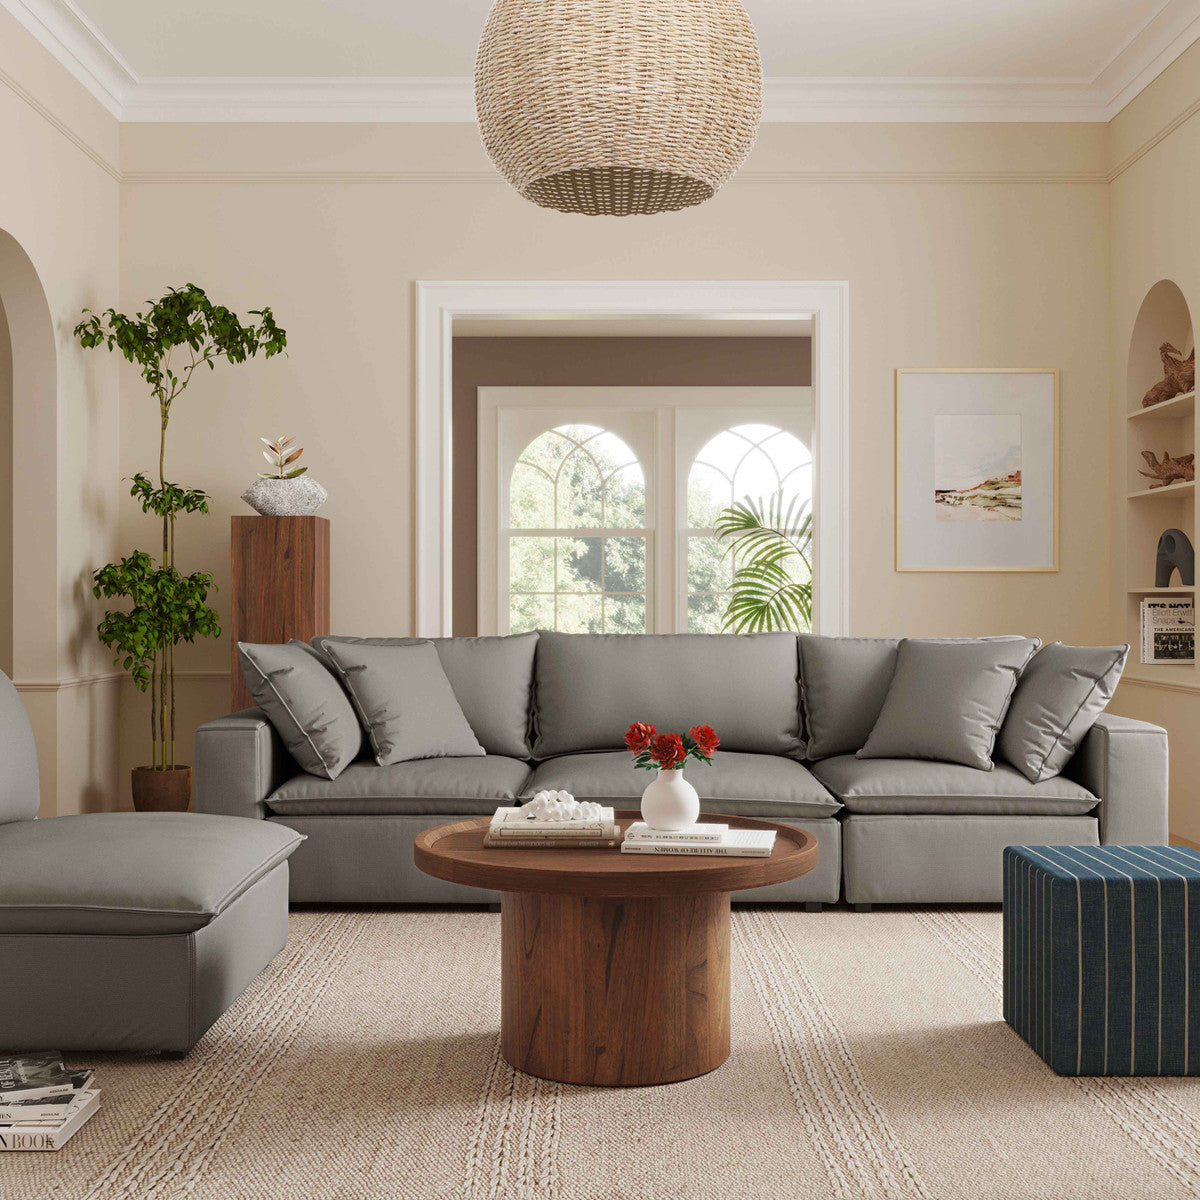 Carlie Slate Modular Sofa - Luxury Living Collection